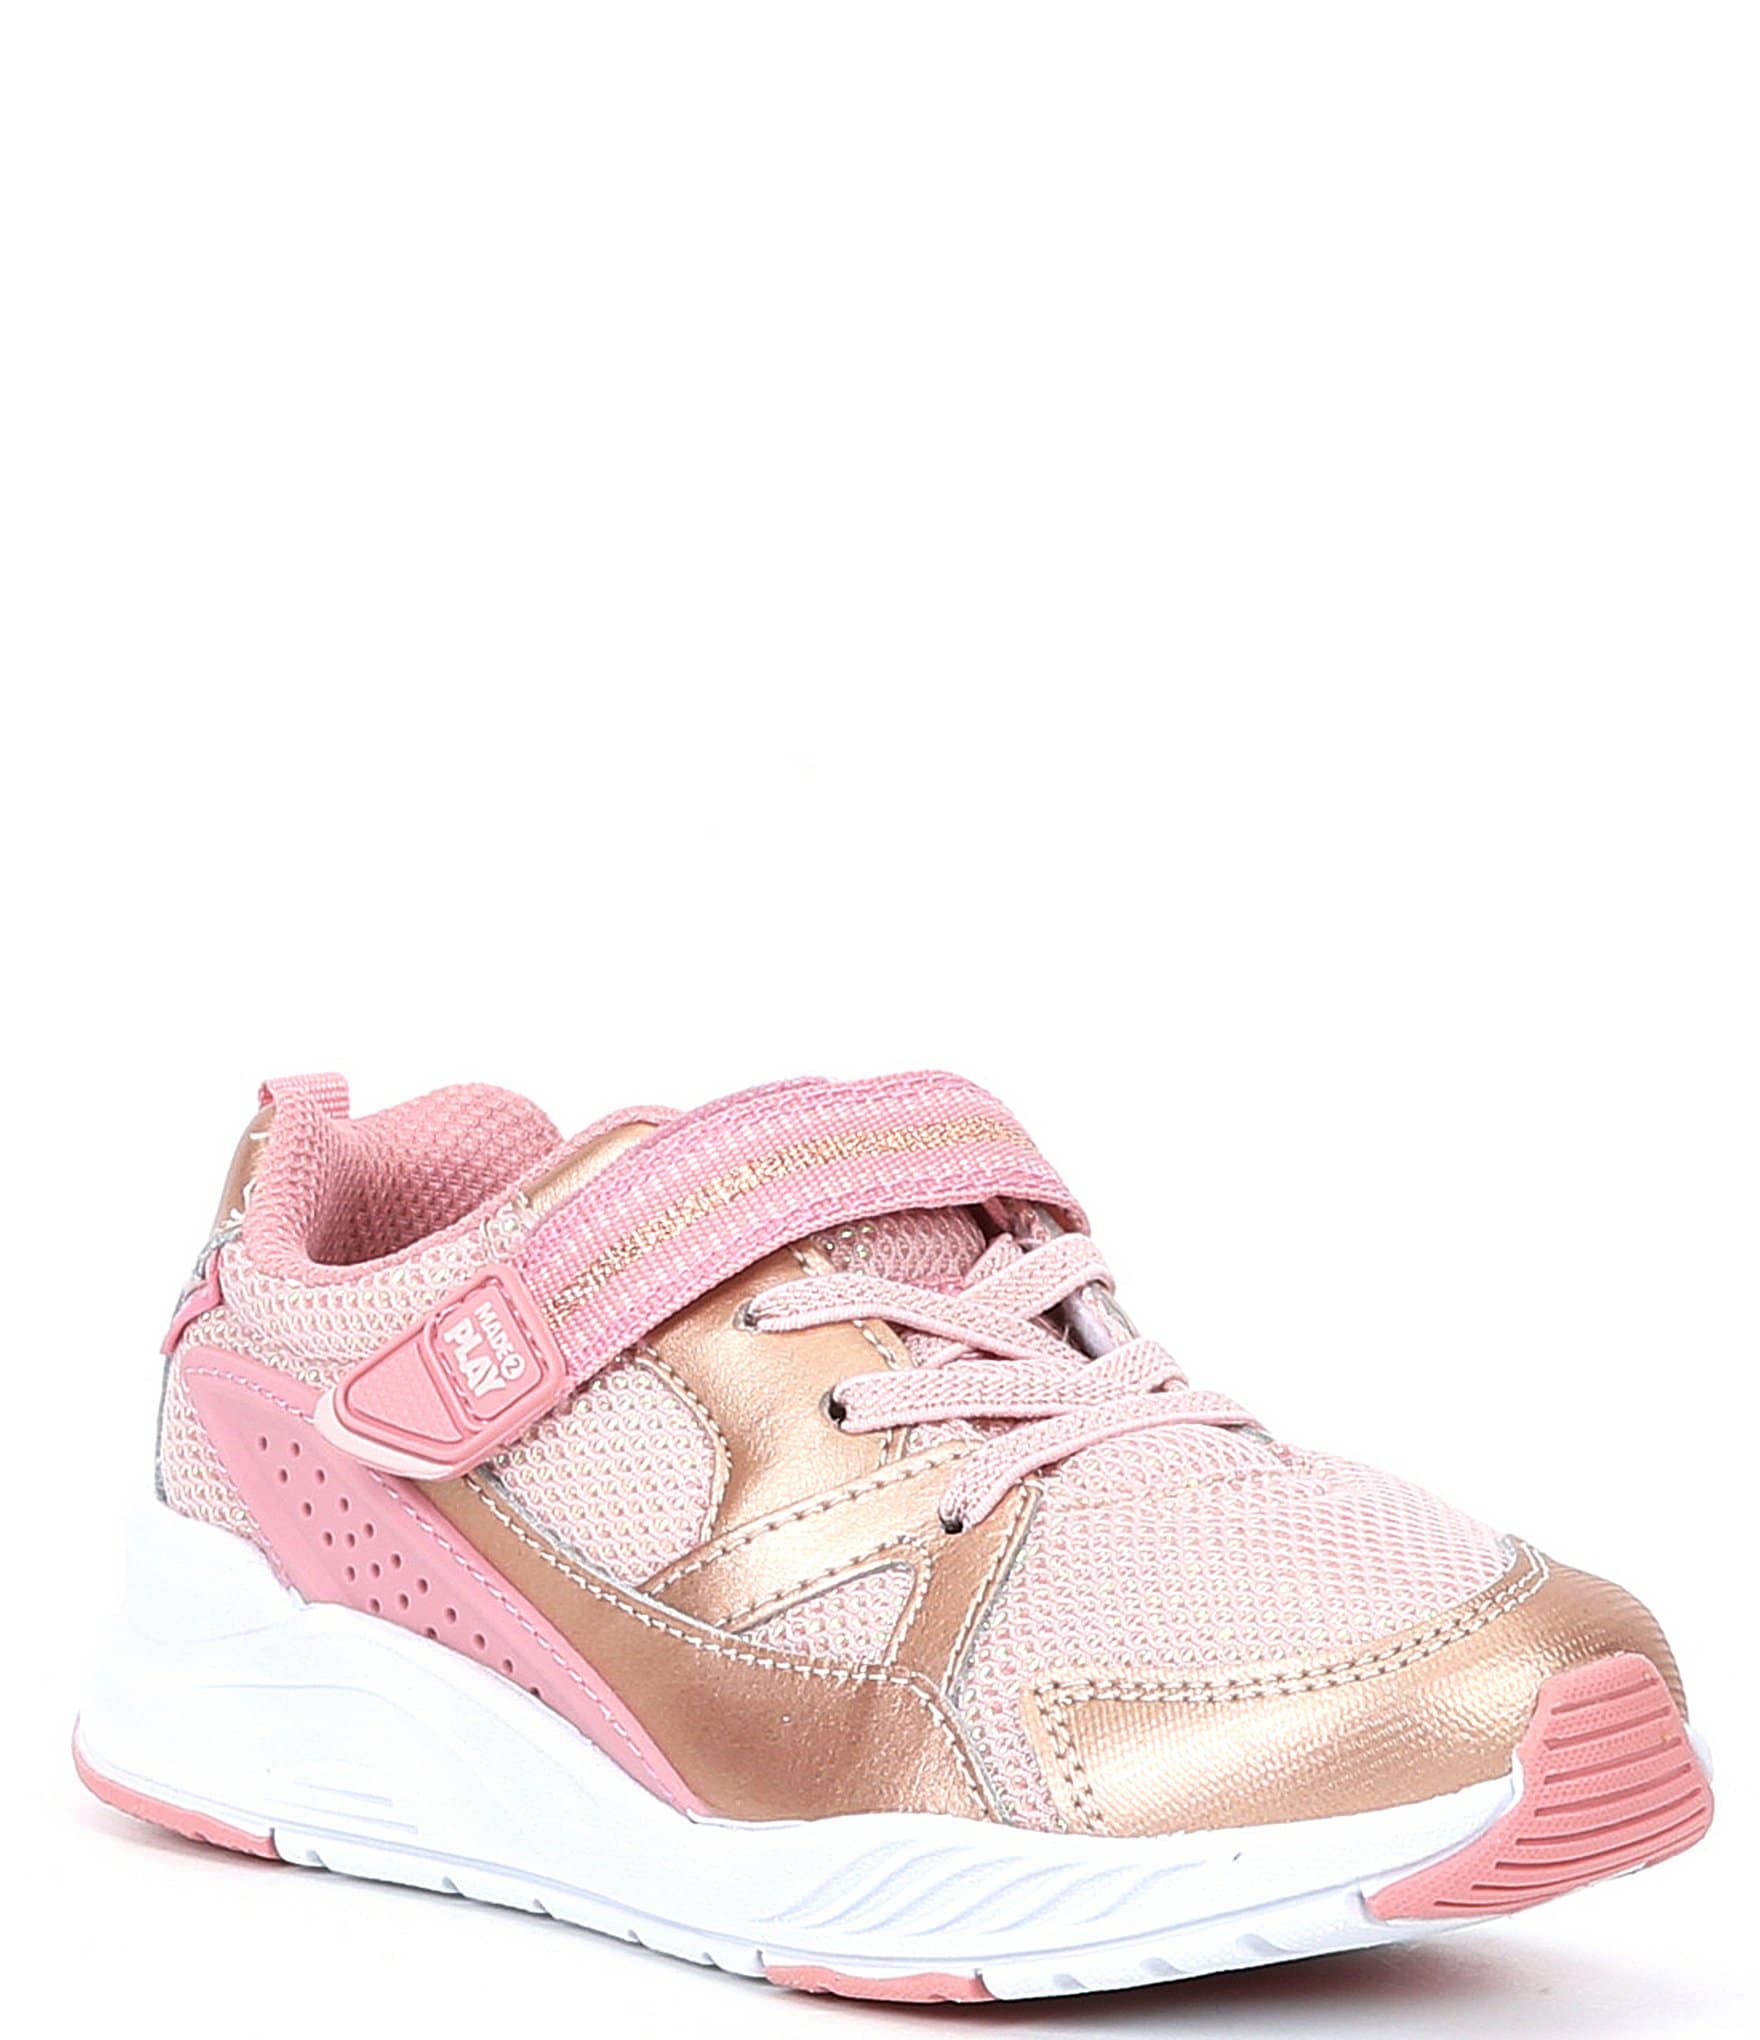 SIZE 5.5 Medium NEW STRIDE RITE Soft Motion Kids Ripley Sneaker Girl Pink 